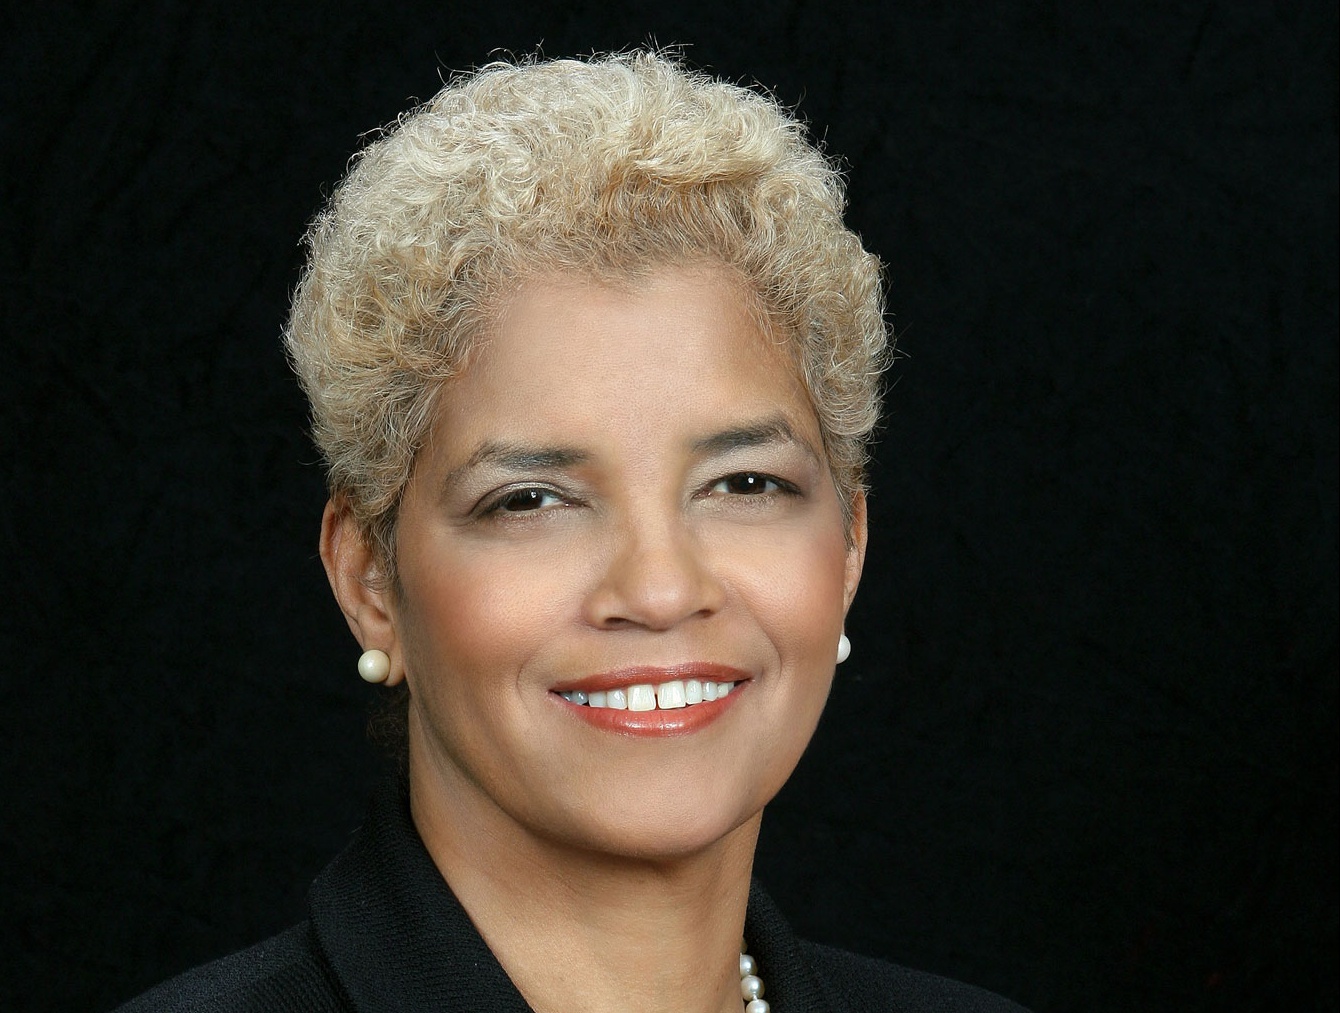 Former Atlanta Mayor Shirley Franklin